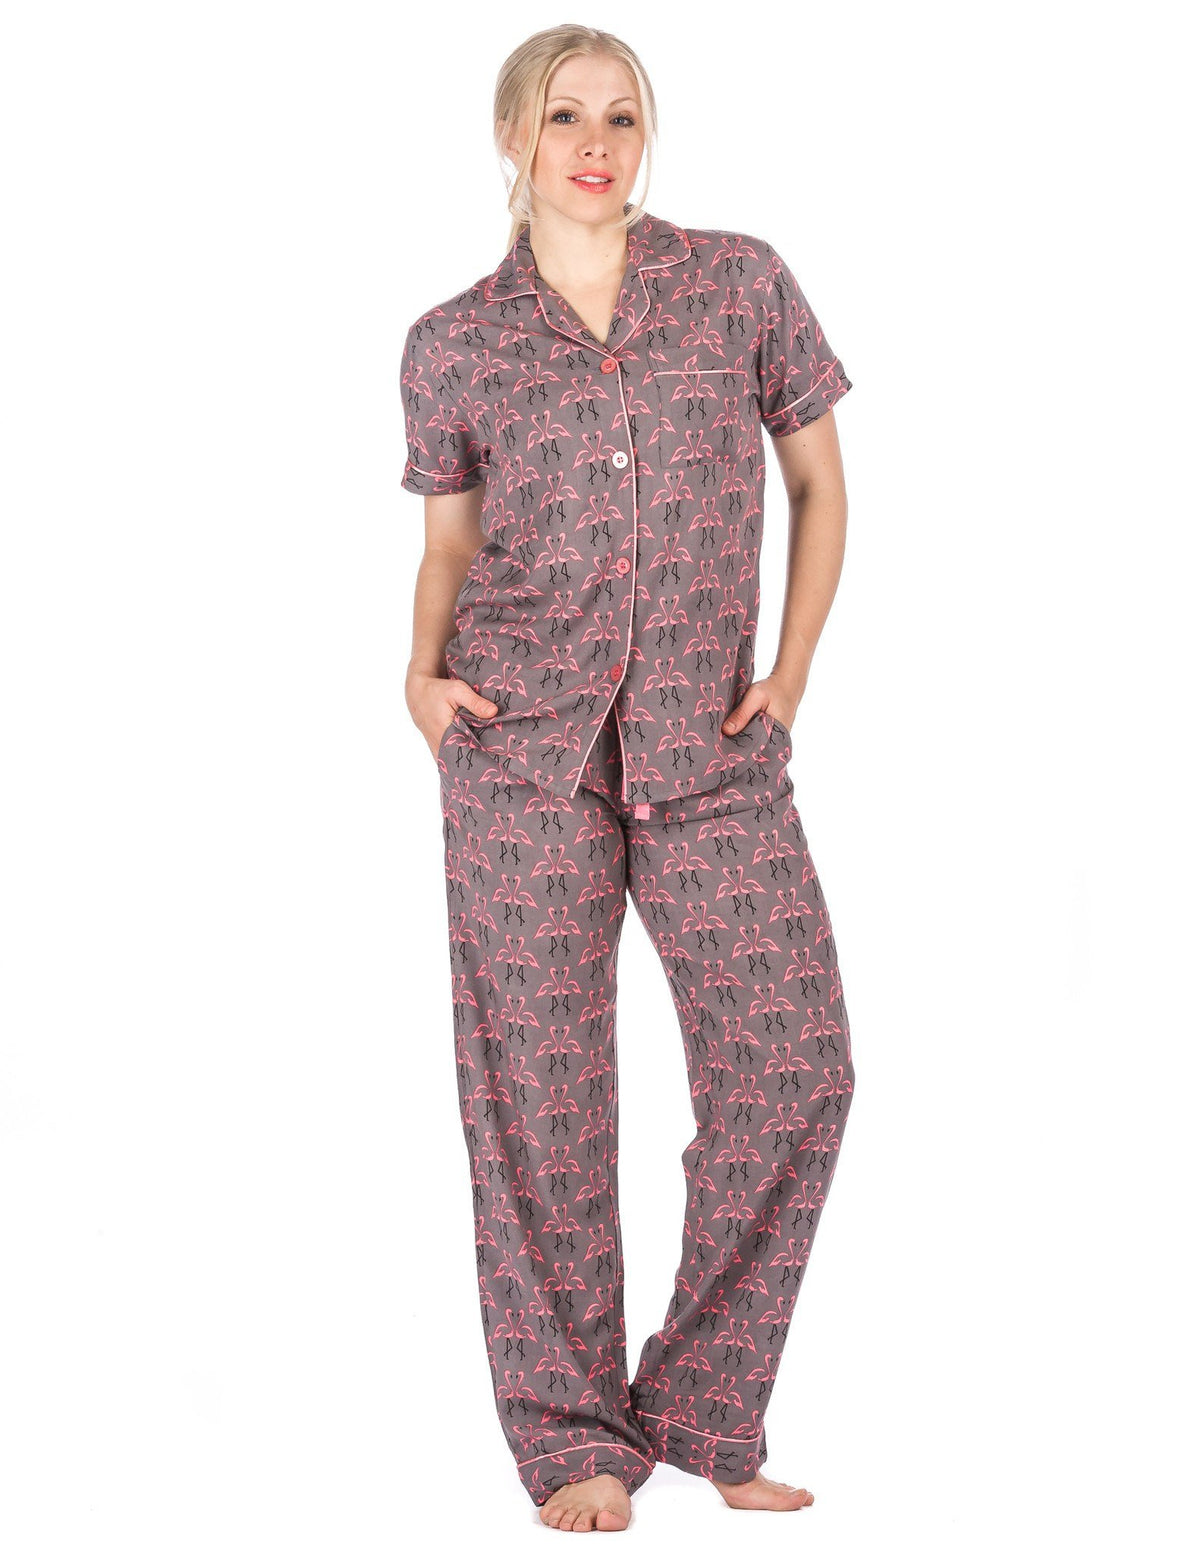 Women's Cool Breeze Woven Short Sleeve Pajama Set - Flamingos - Grey/Pink